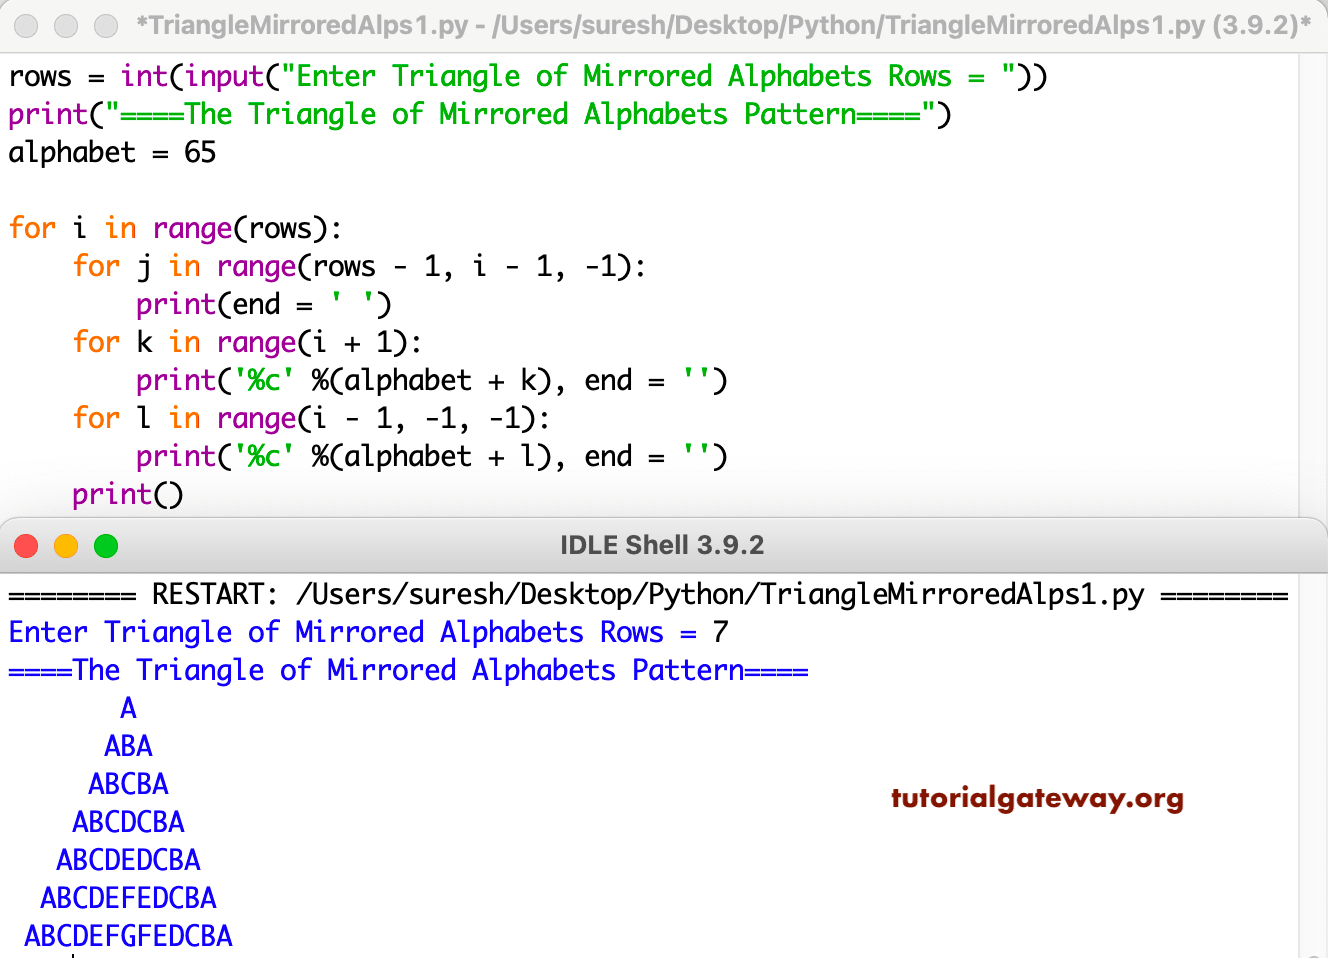 Python Program to Print Triangle of Mirrored Alphabets Pattern